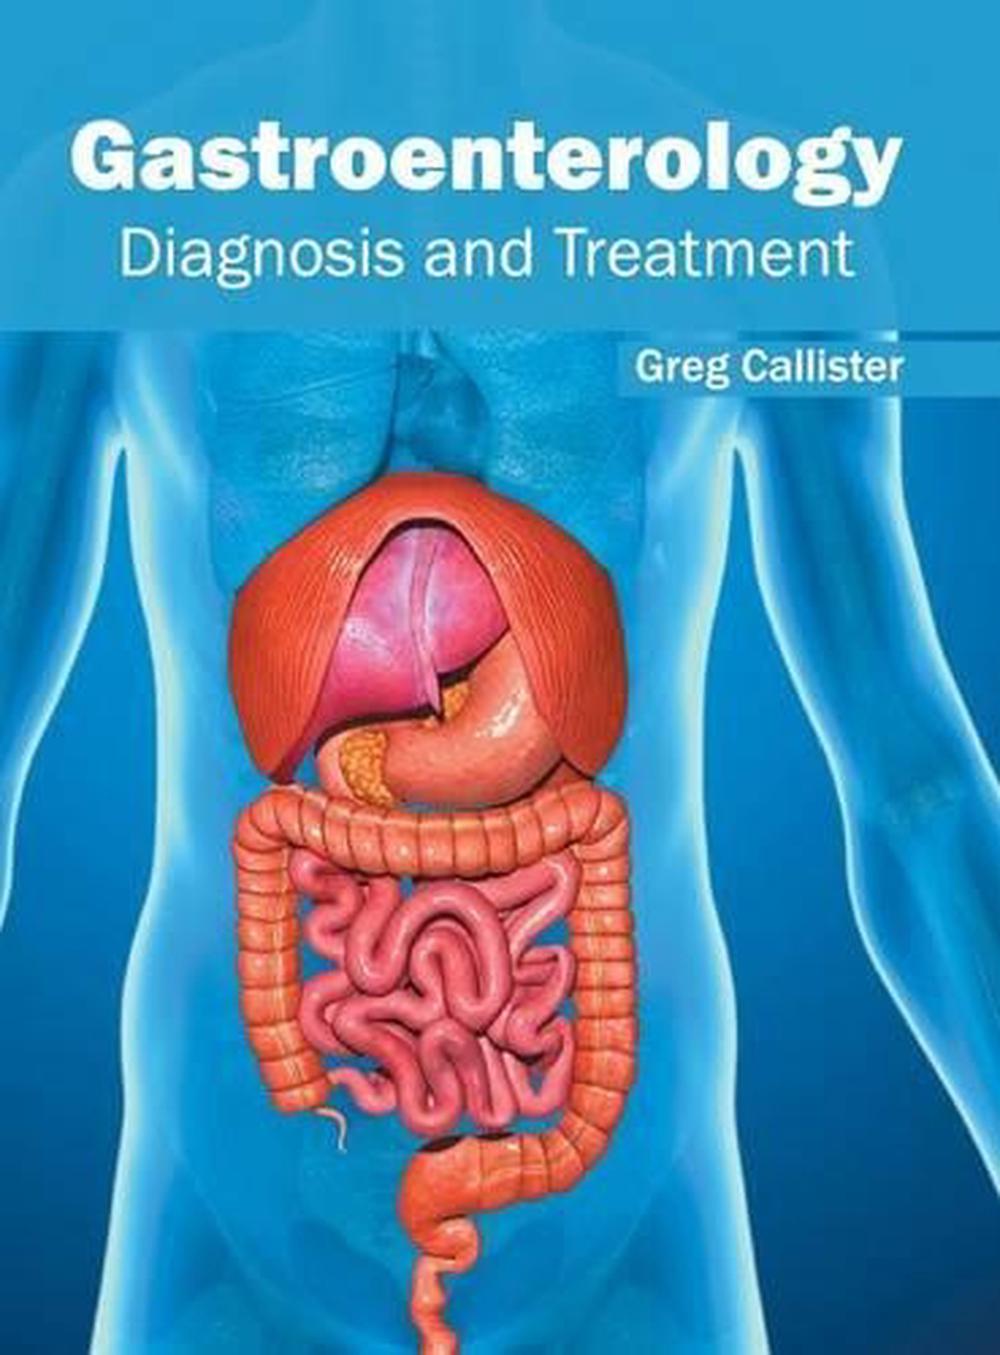 dissertation topics in gastroenterology